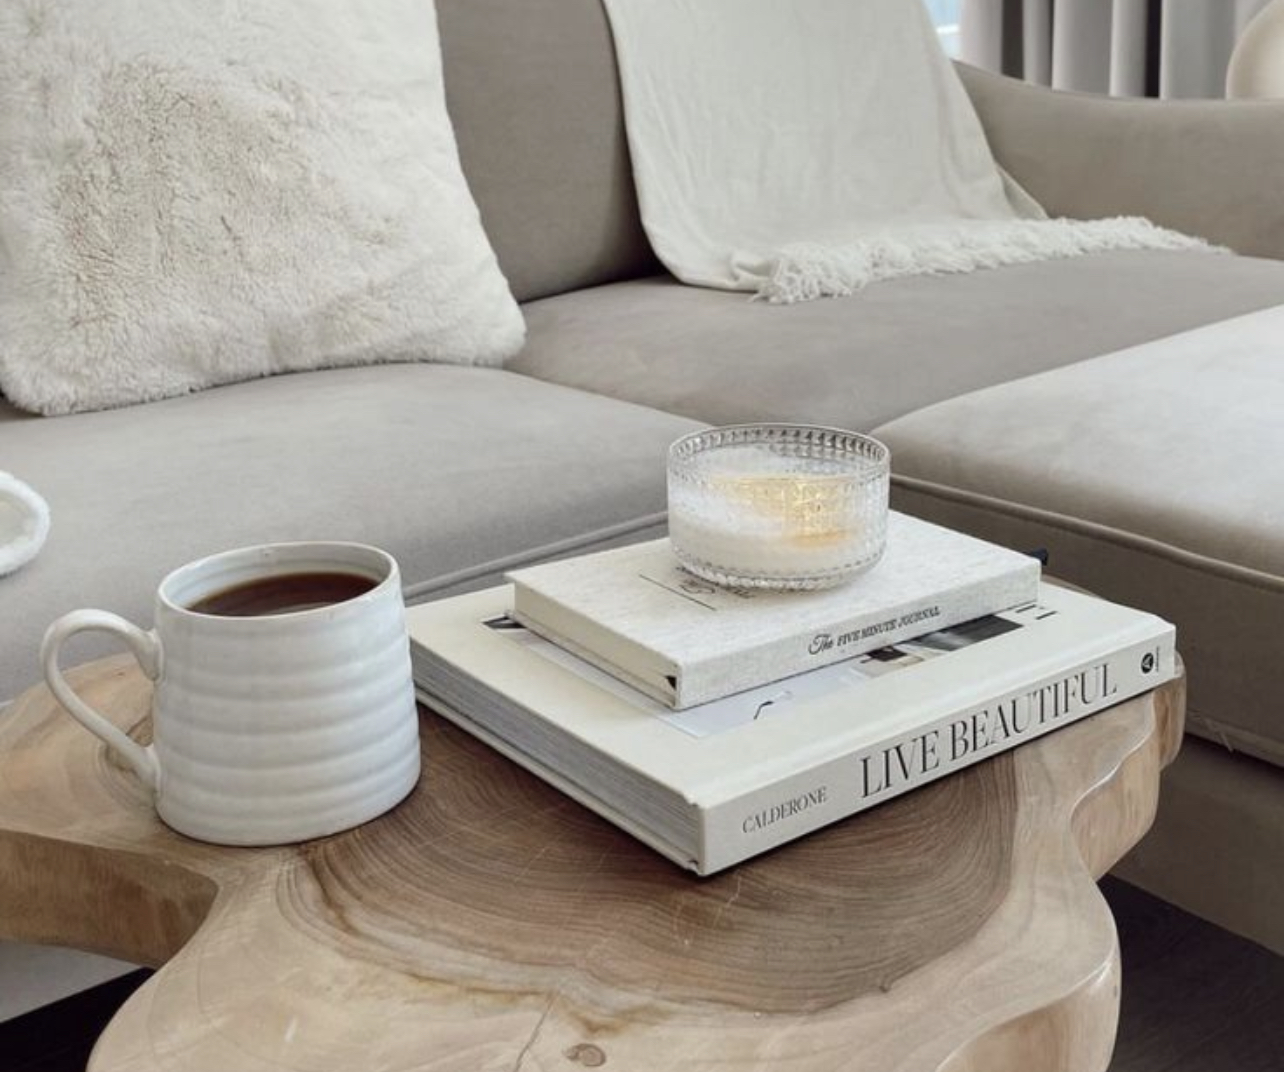 Coffee Table Books: Τα ωραιότερα βιβλία για να ξεφυλλίσεις και να διακοσμήσεις το χώρο σου